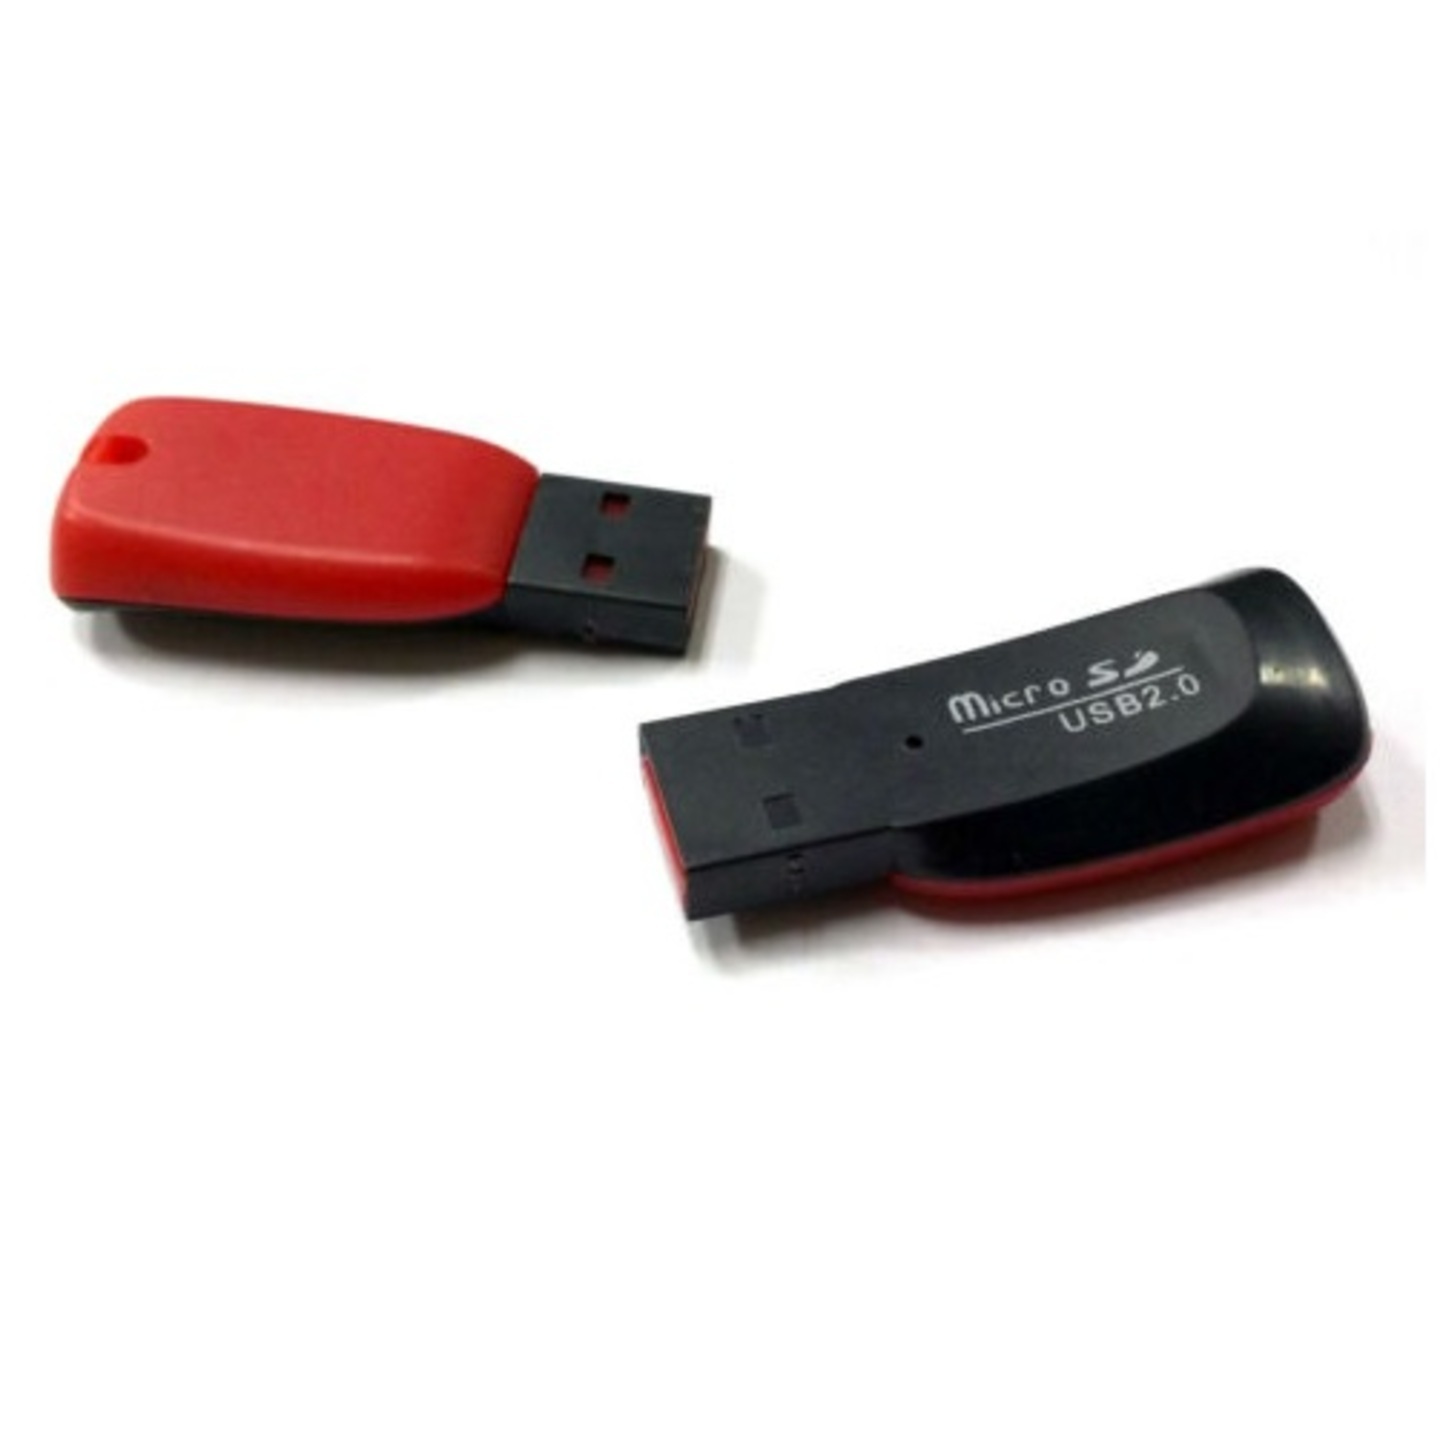 Pen Drive shape micro SD memory card reader